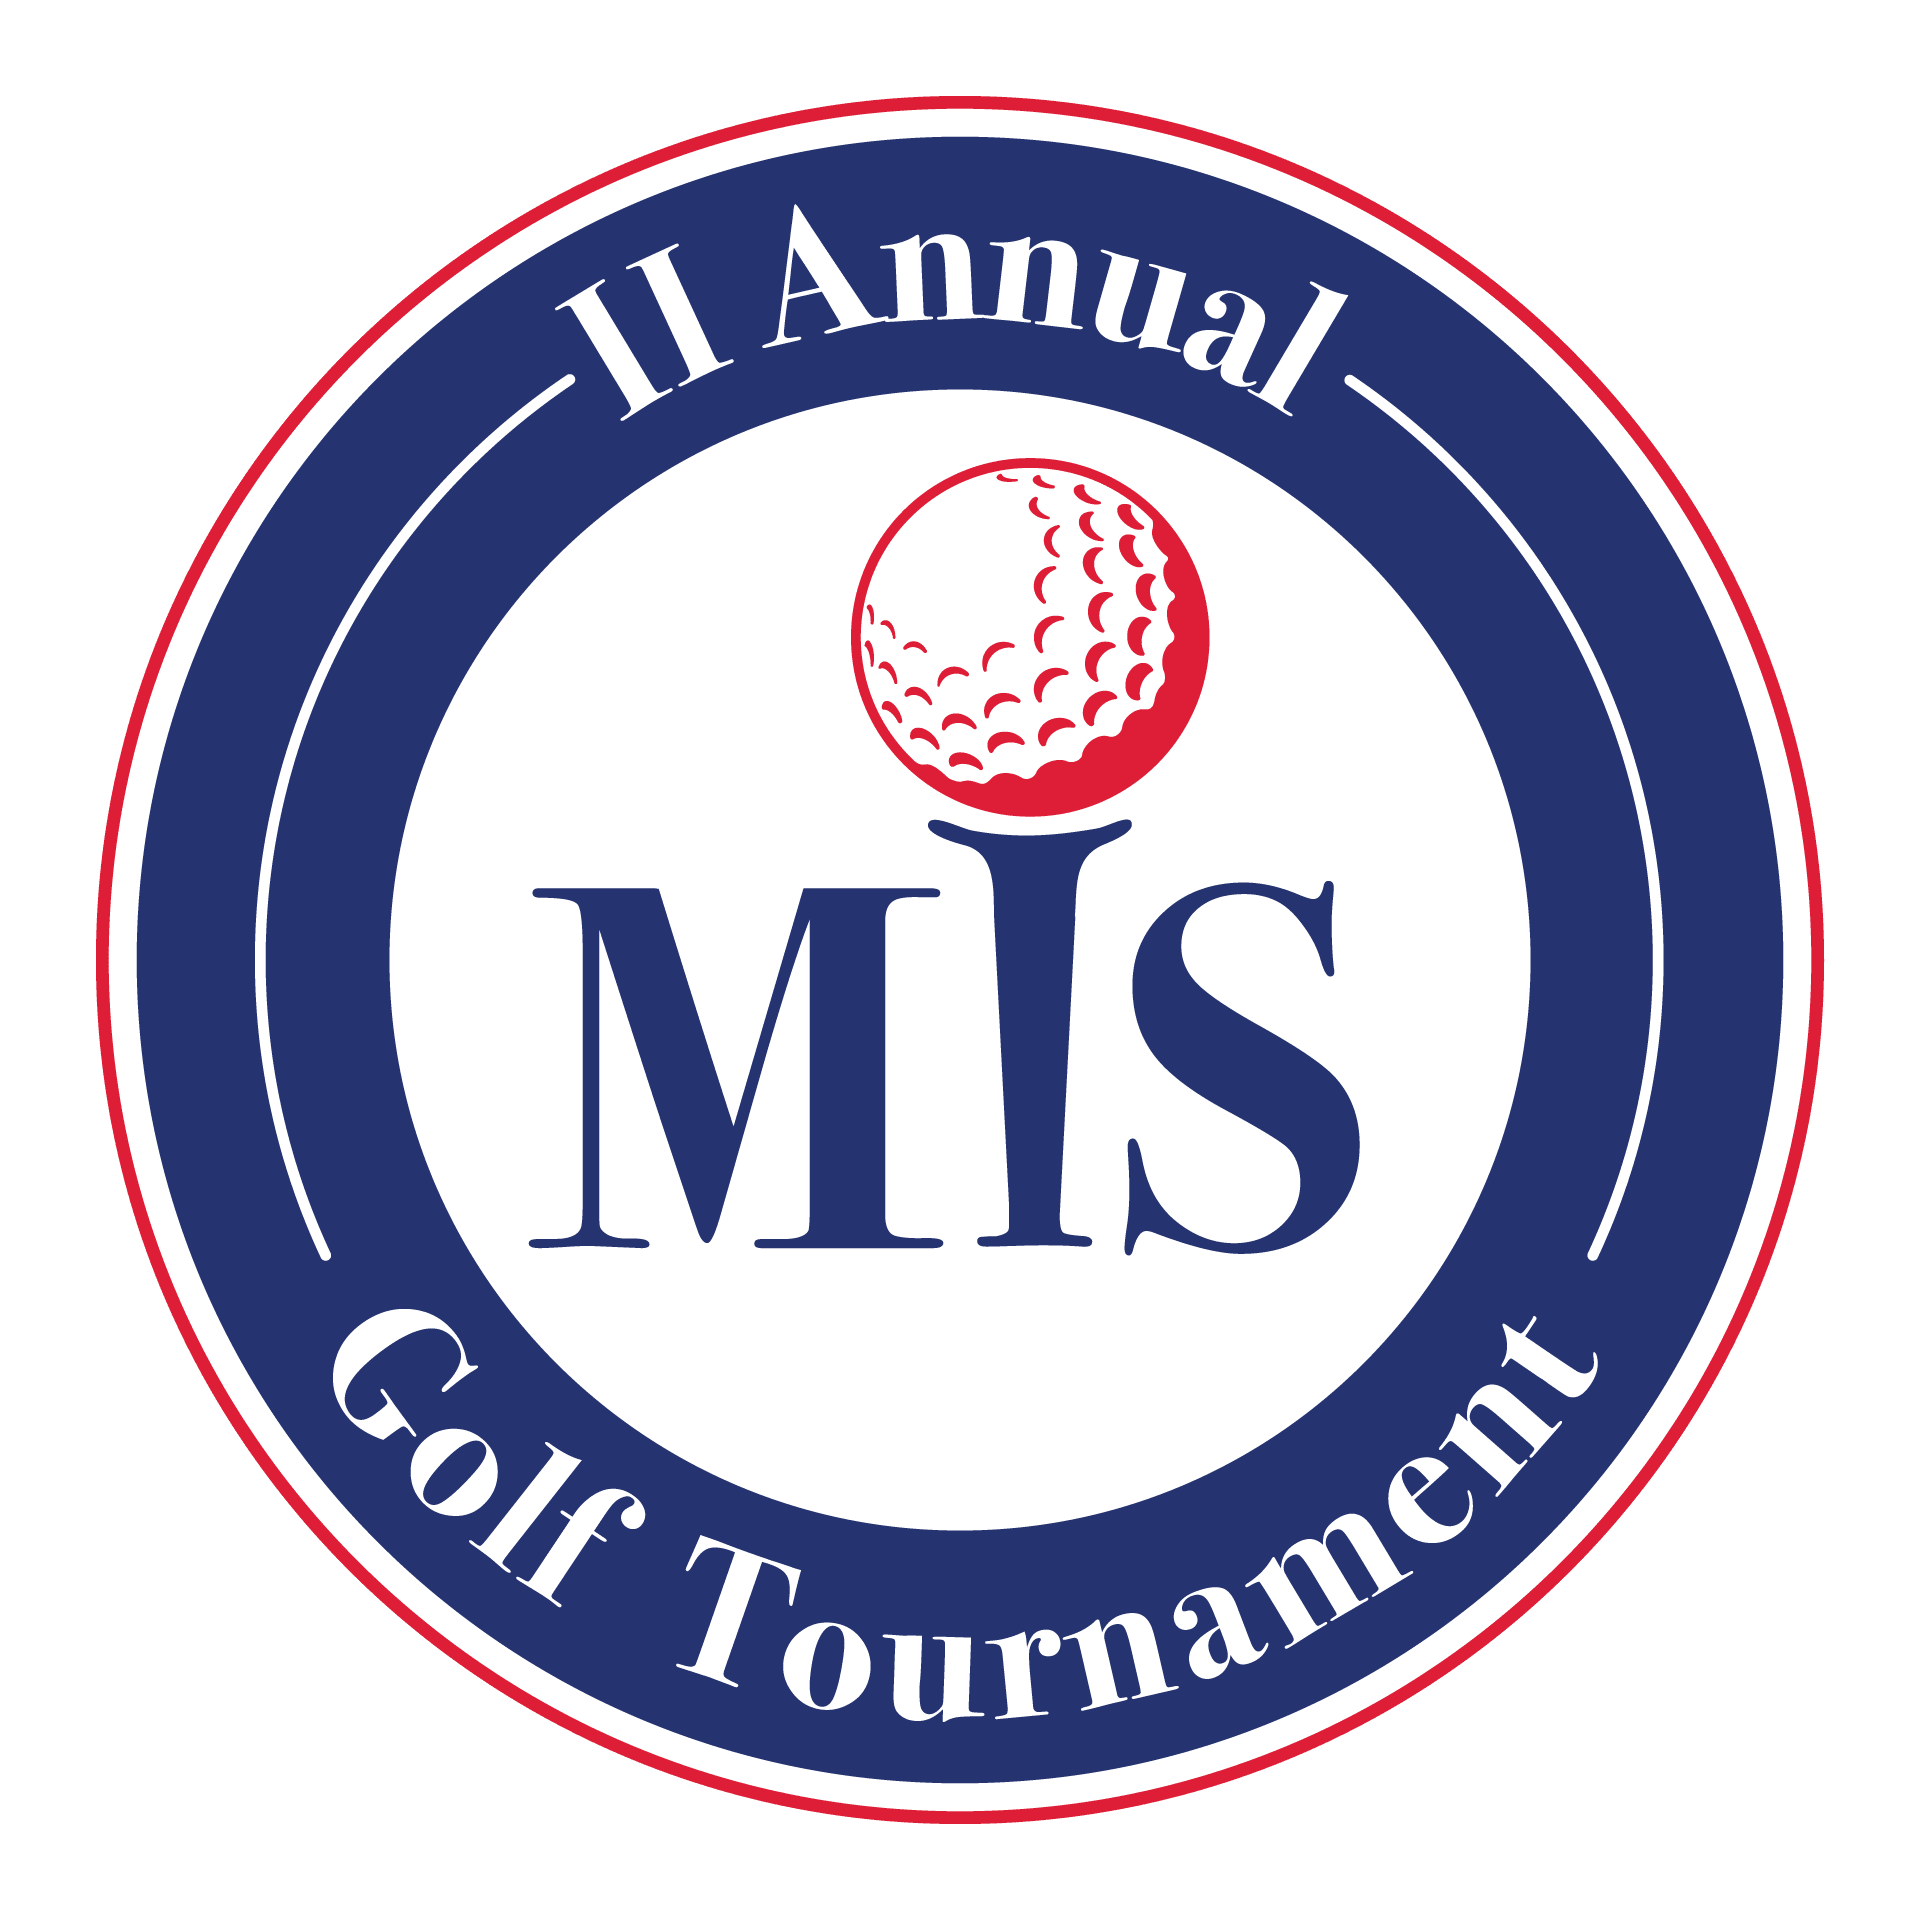 BirdEase  Golf Tournament Website & Registration Software